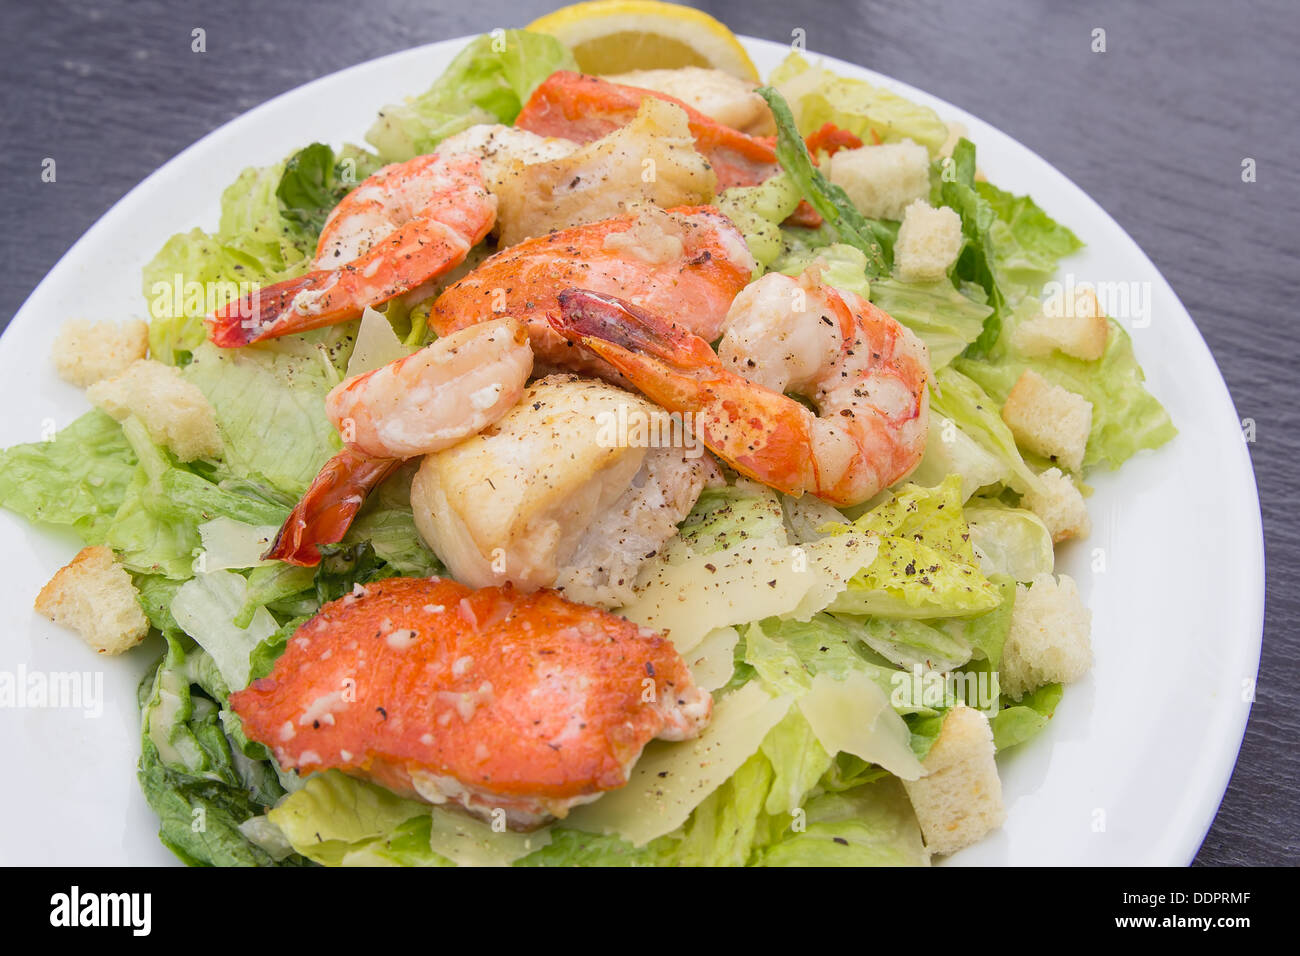 Caesar Salad with Prawns Salmon White Cod Fish Croutons Lemon and Cracked Black Pepper Closeup Stock Photo